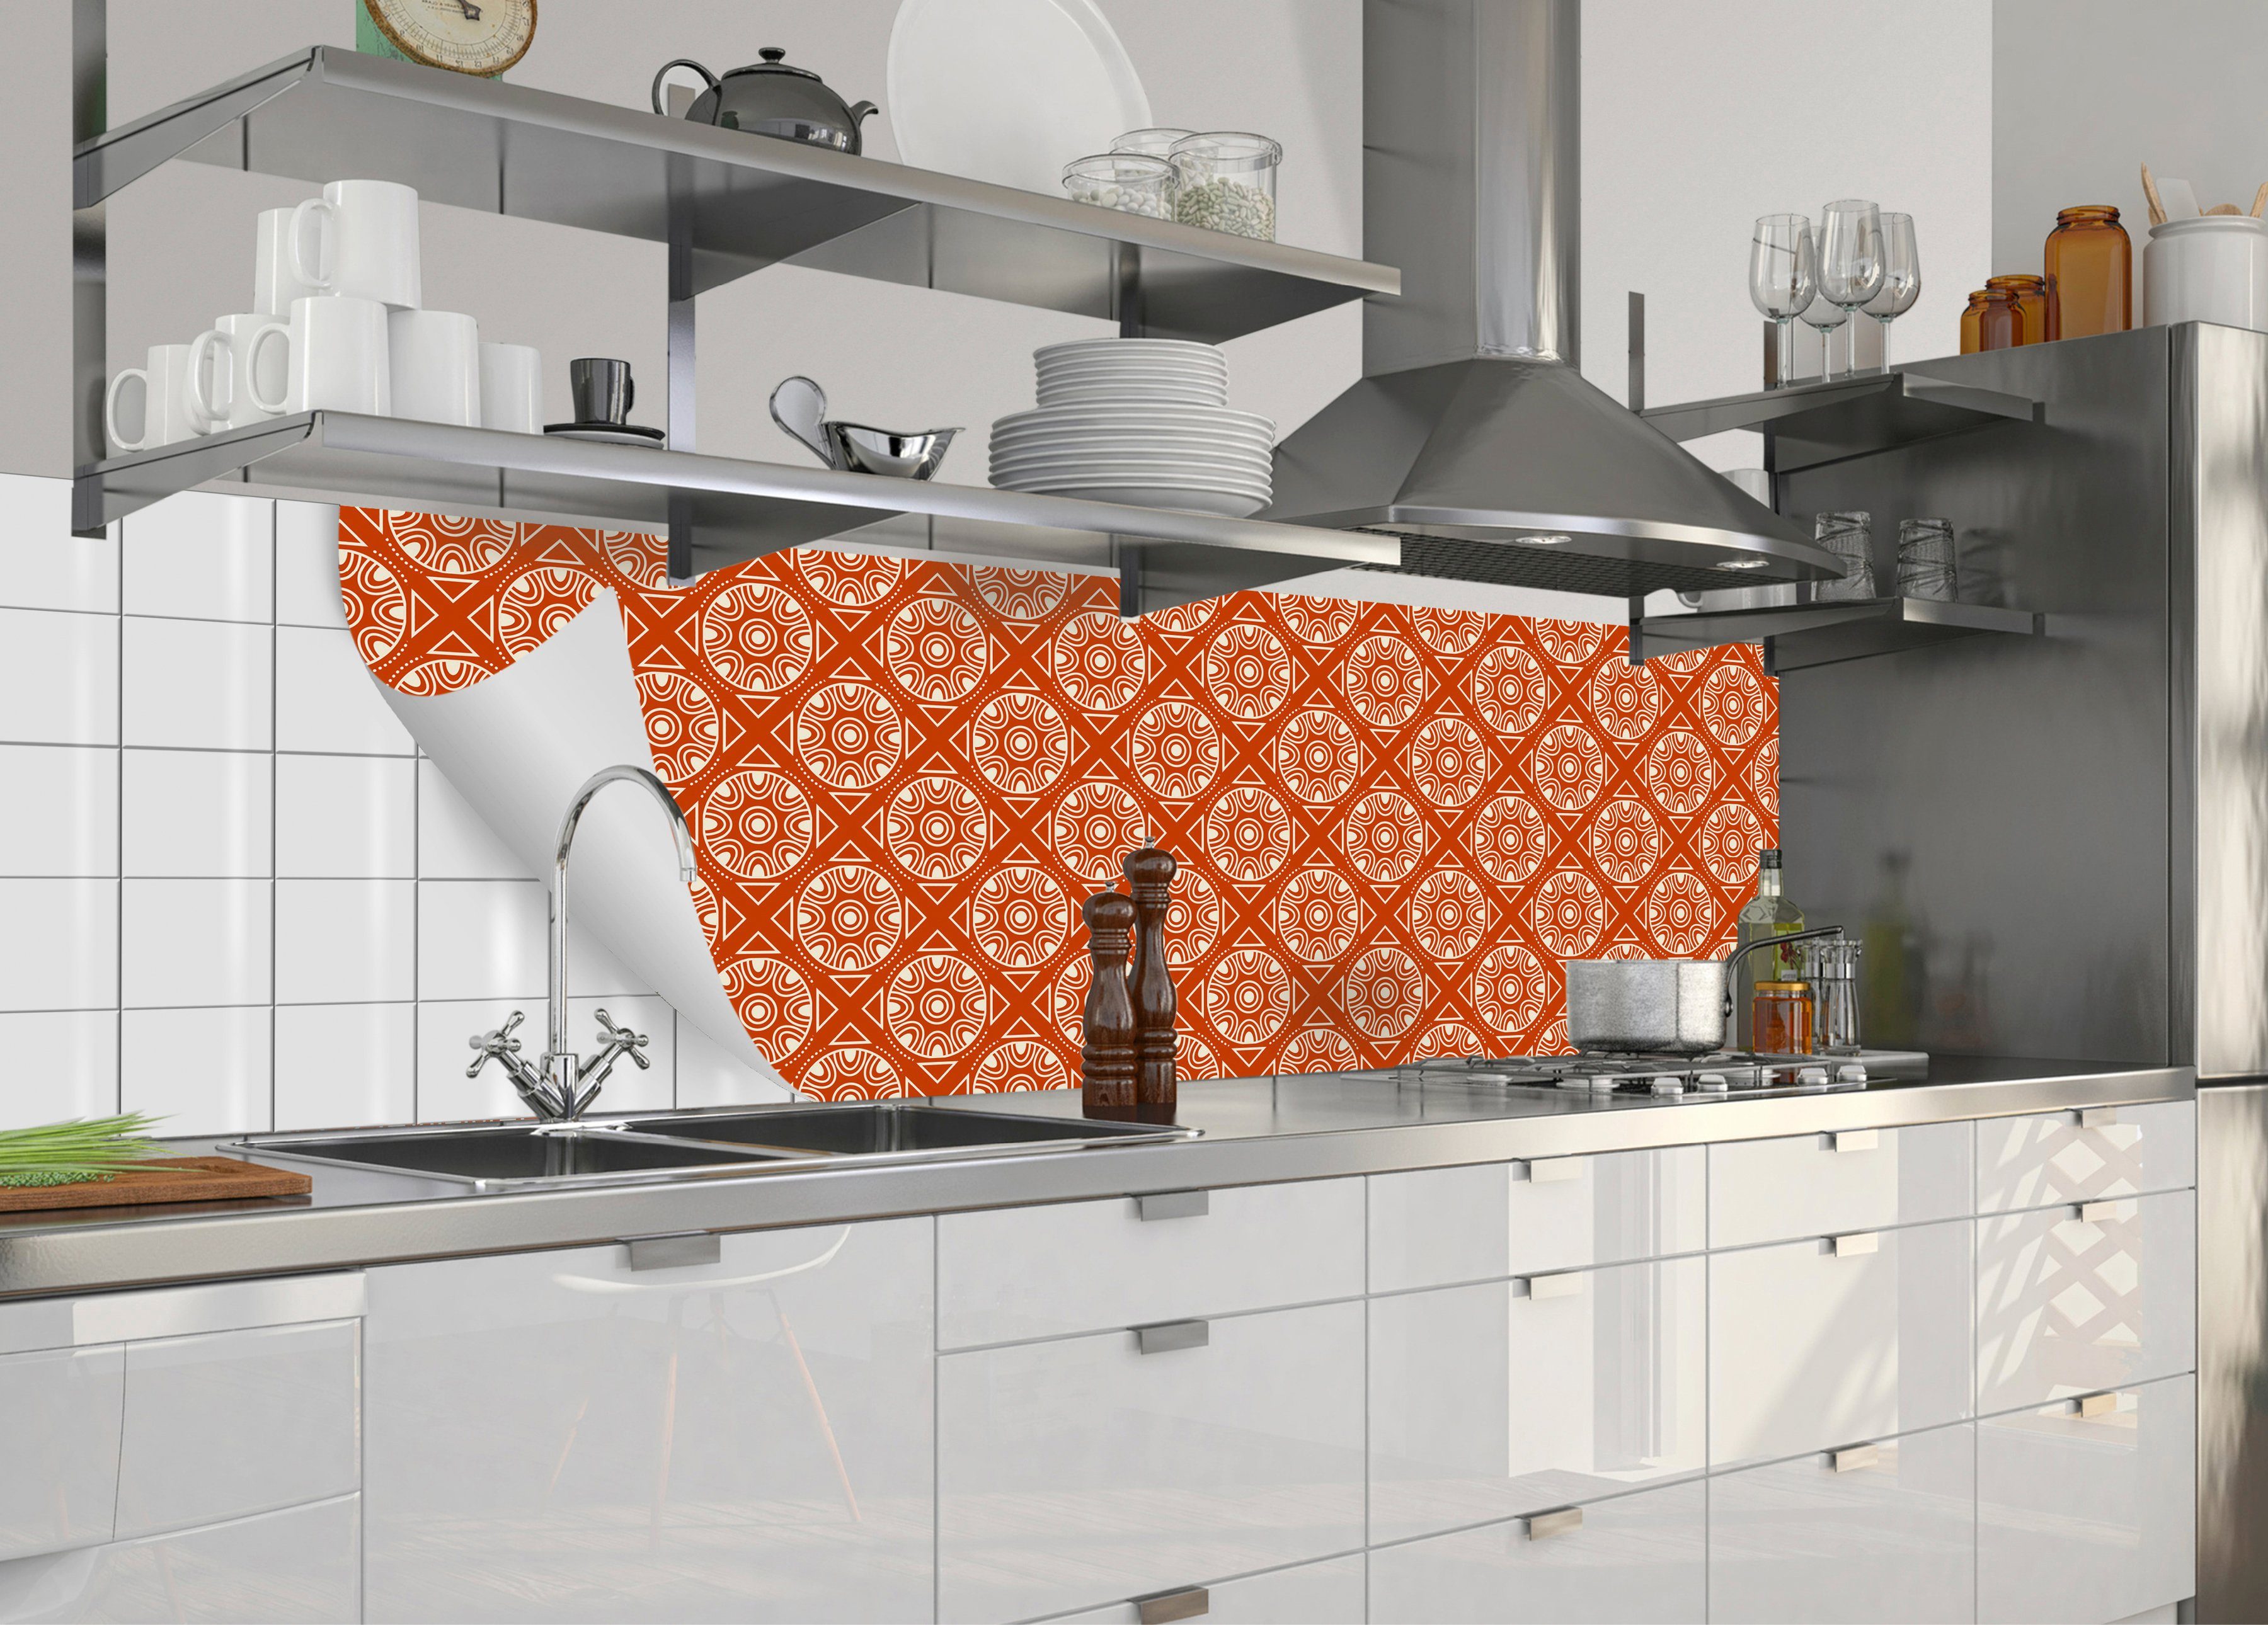 Spanish selbstklebende flexible Pattern, fixy MySpotti Küchenrückwand-Folie Küchenrückwand und